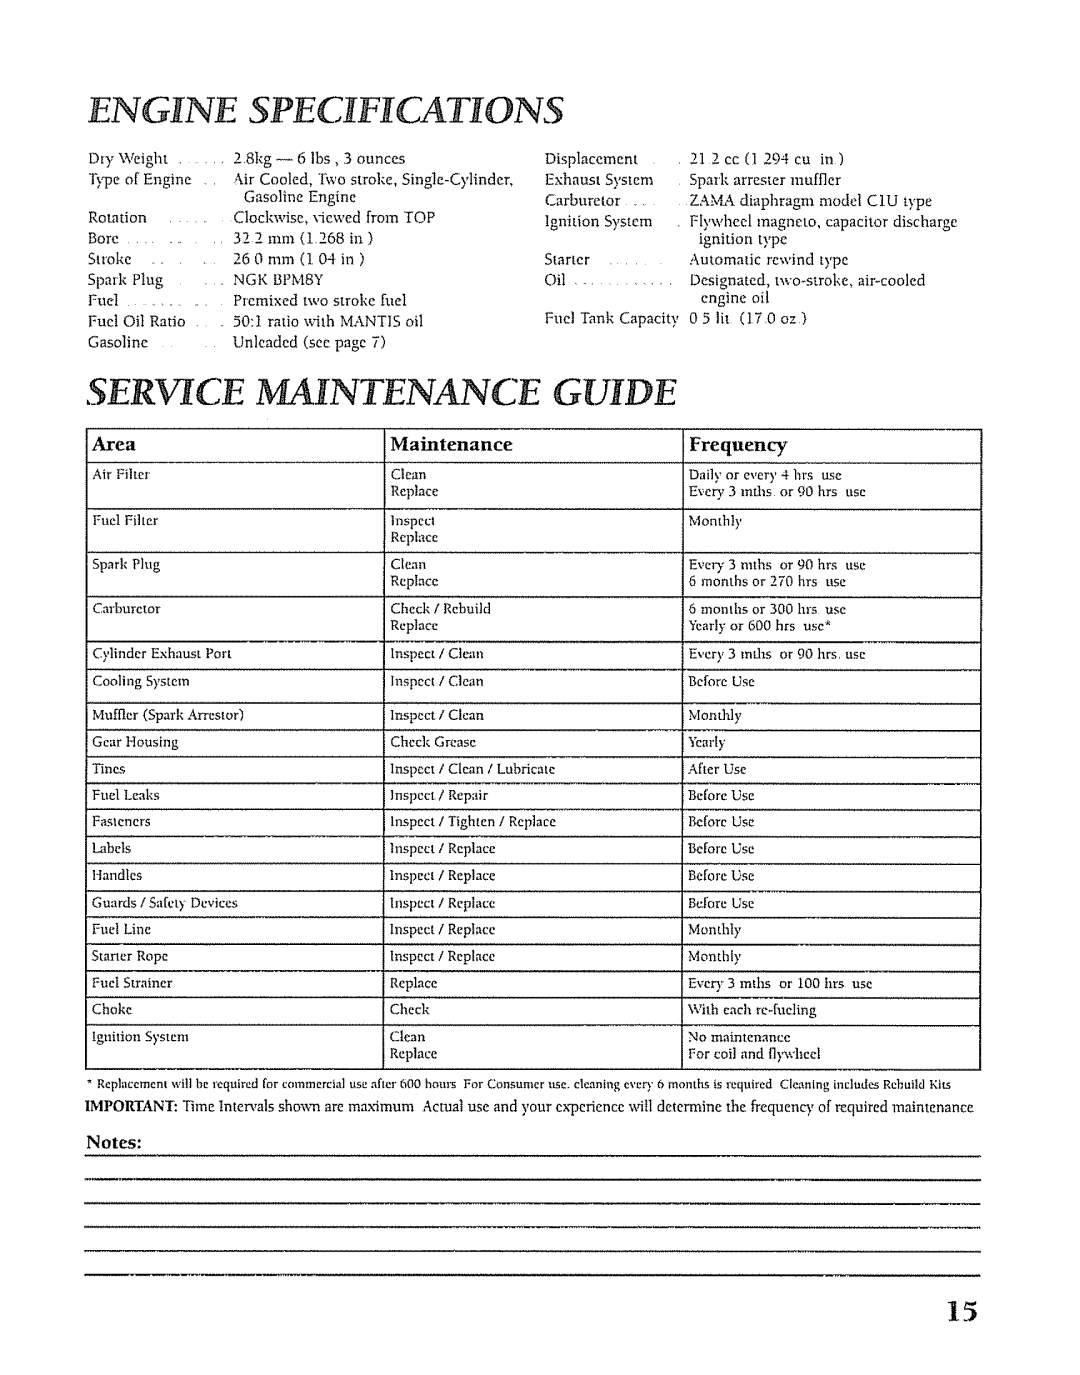 Mantis SV-5C/2 manual Engine Specihcat Ons, Service, Maintenance, Gu!Id F, Frequency 